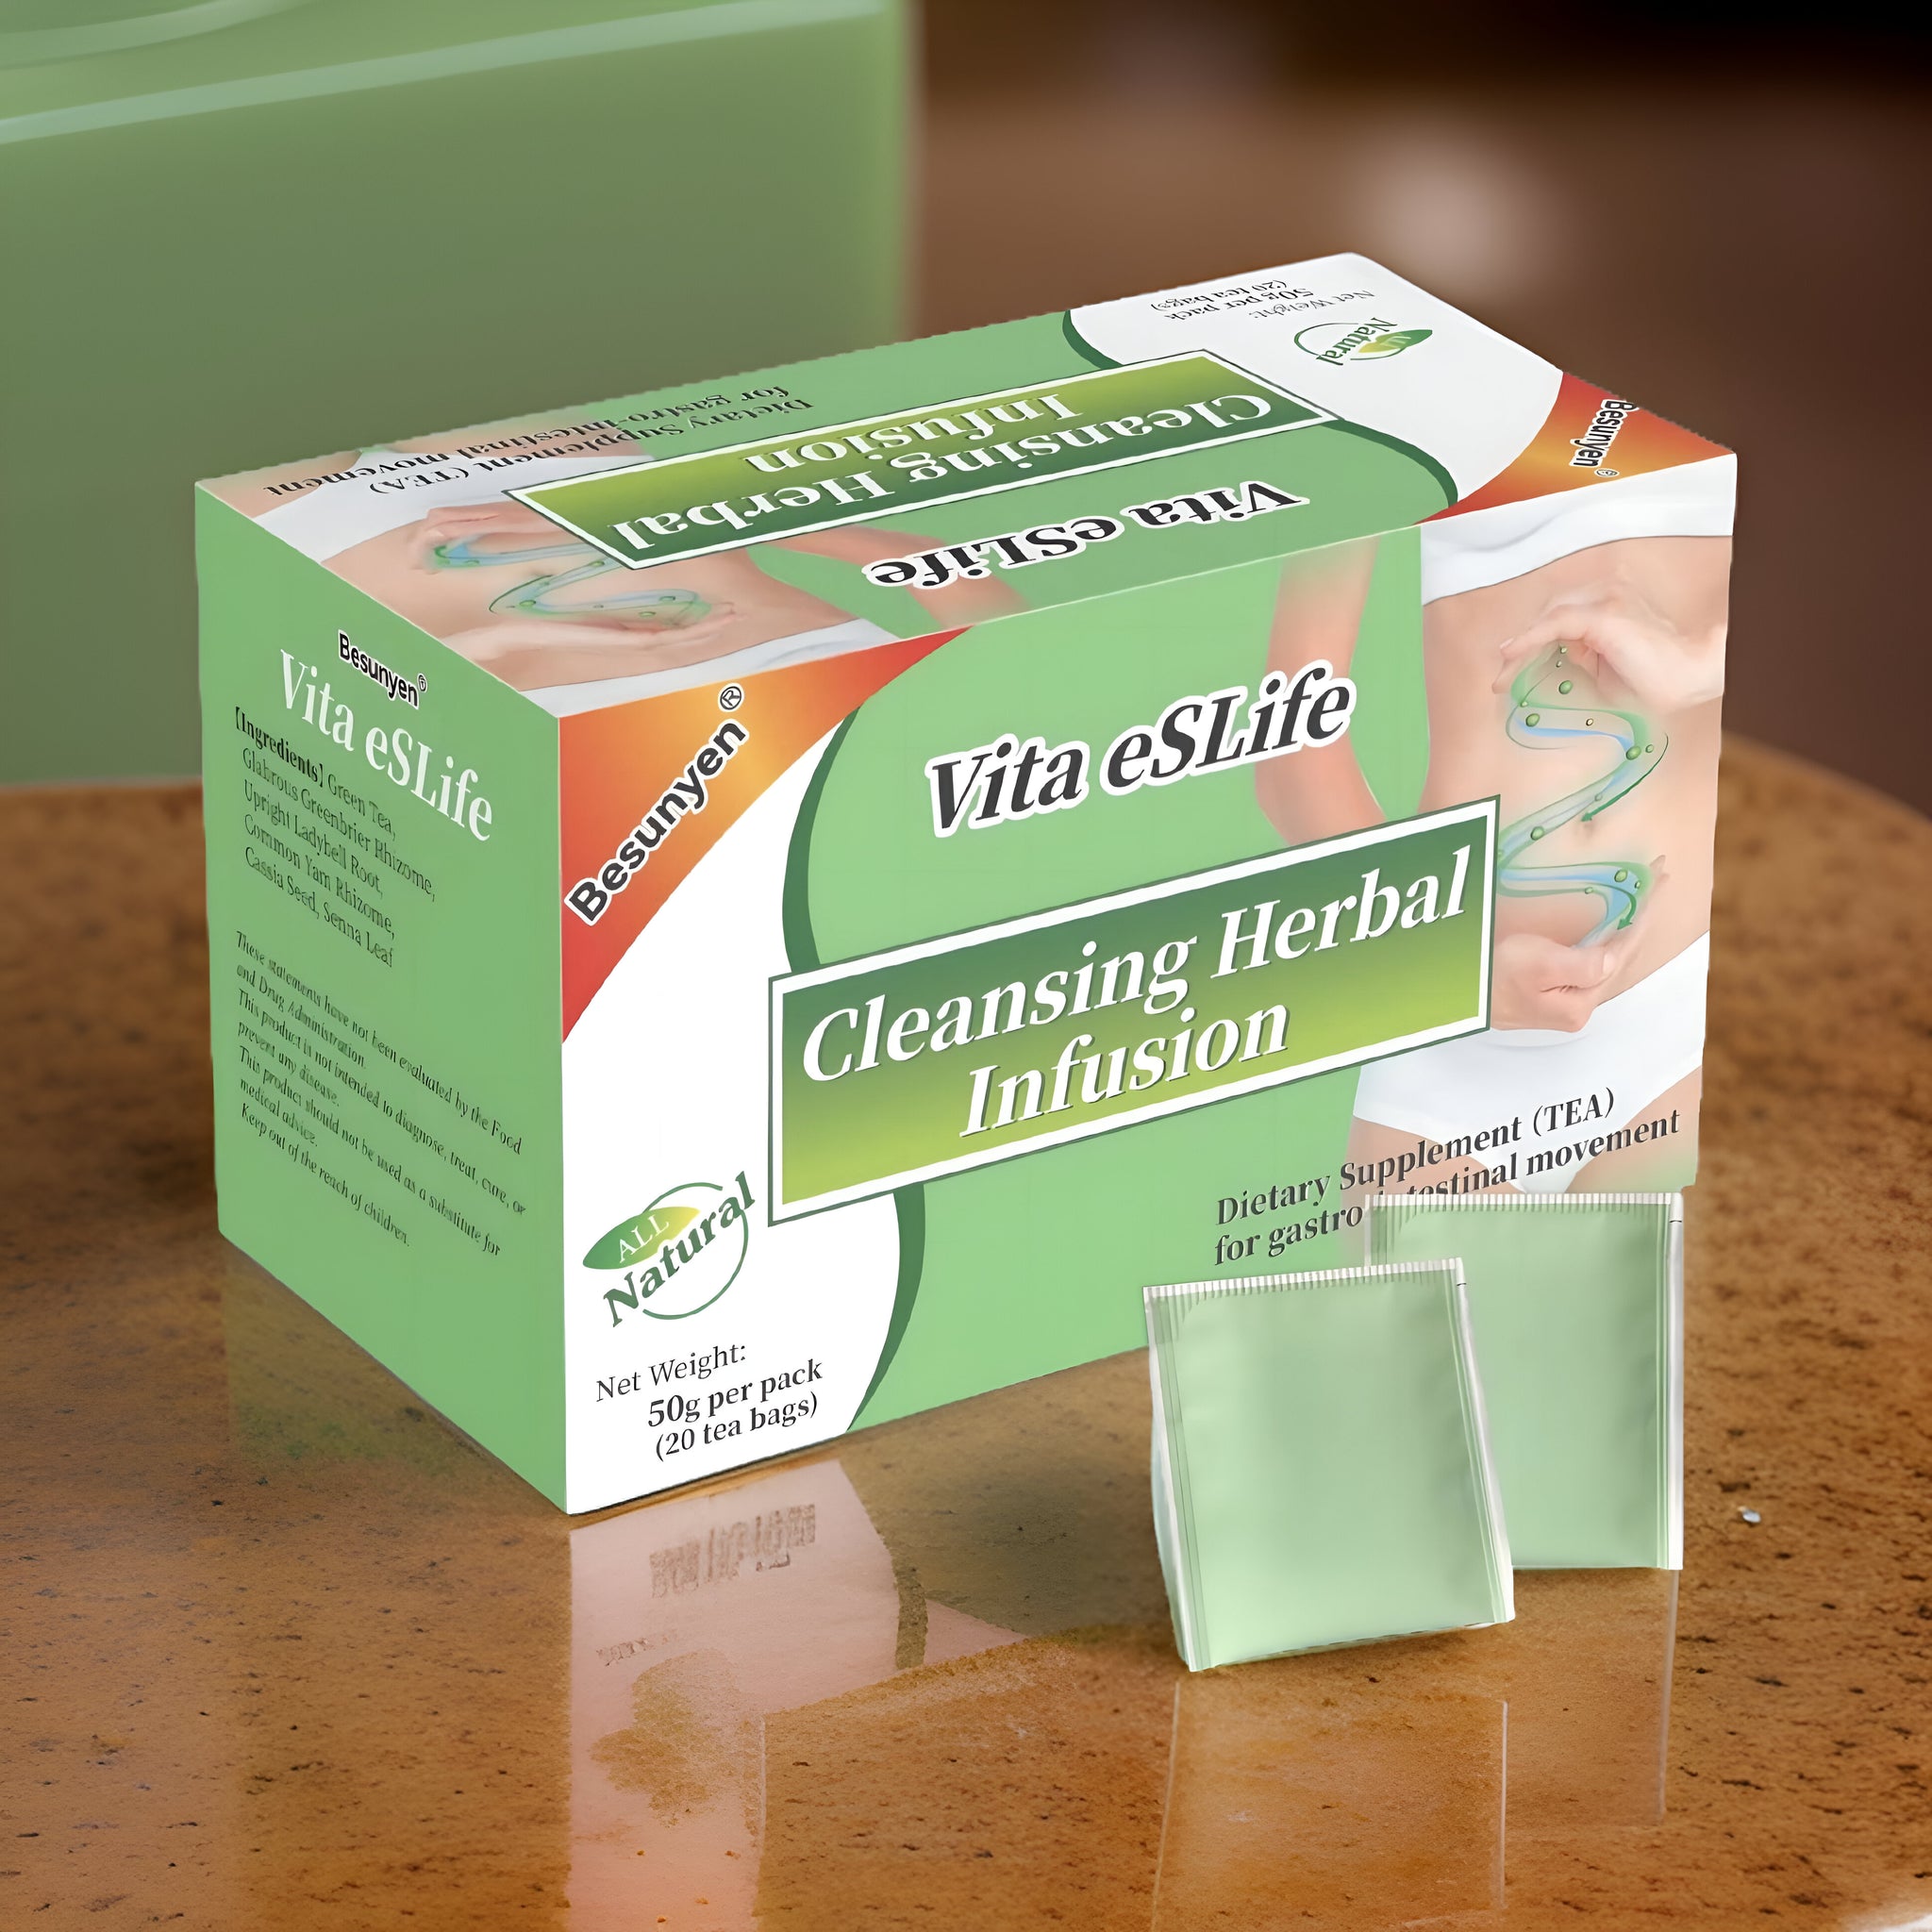 Vita esLife cleansing Herbal Infution Detox 15 day Cleanse